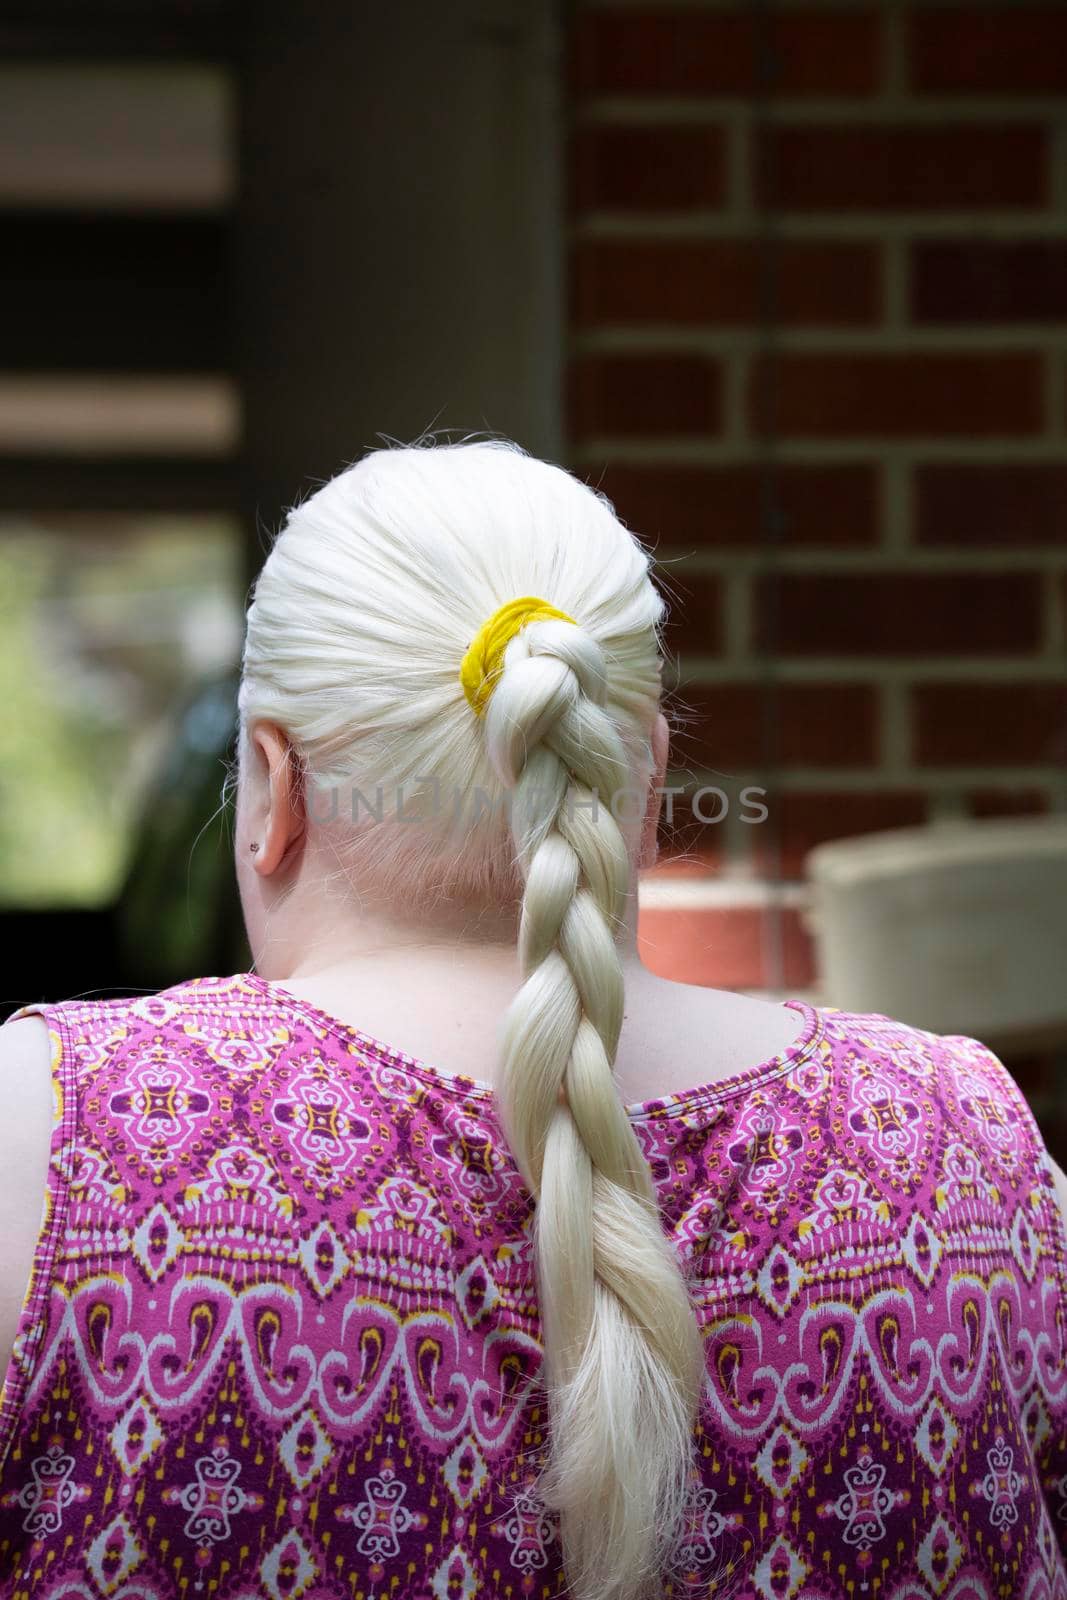 Woman wearing braids in her long, white hair